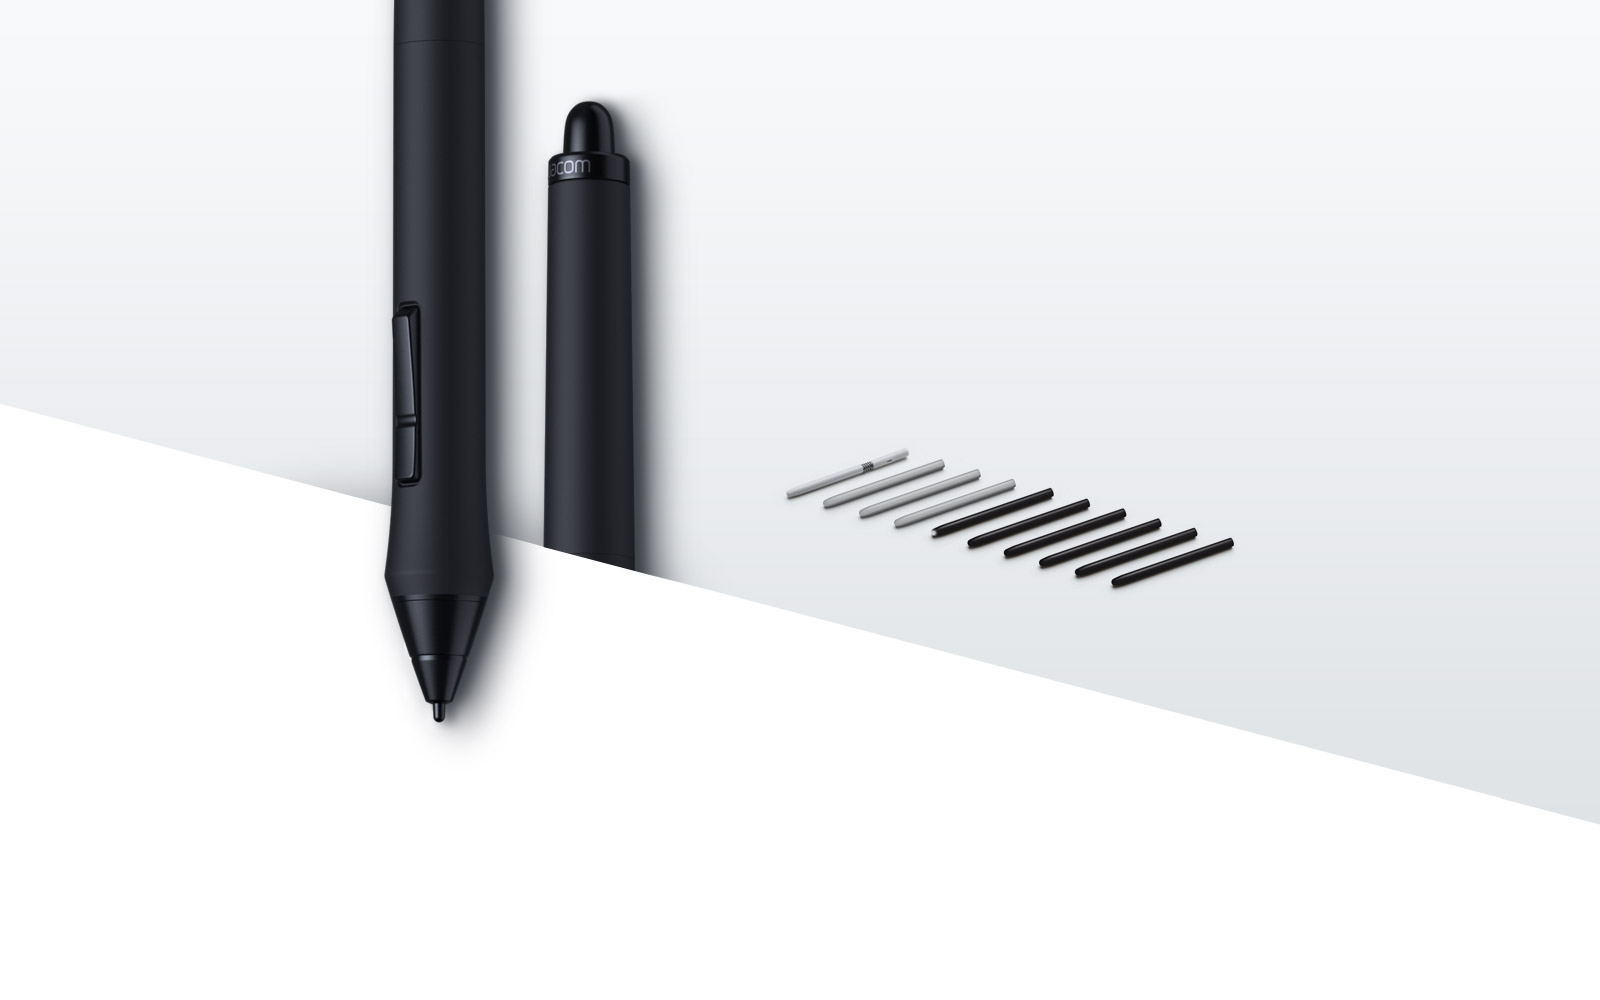 Left-Handed Writer Pen Accessories : pen accessory